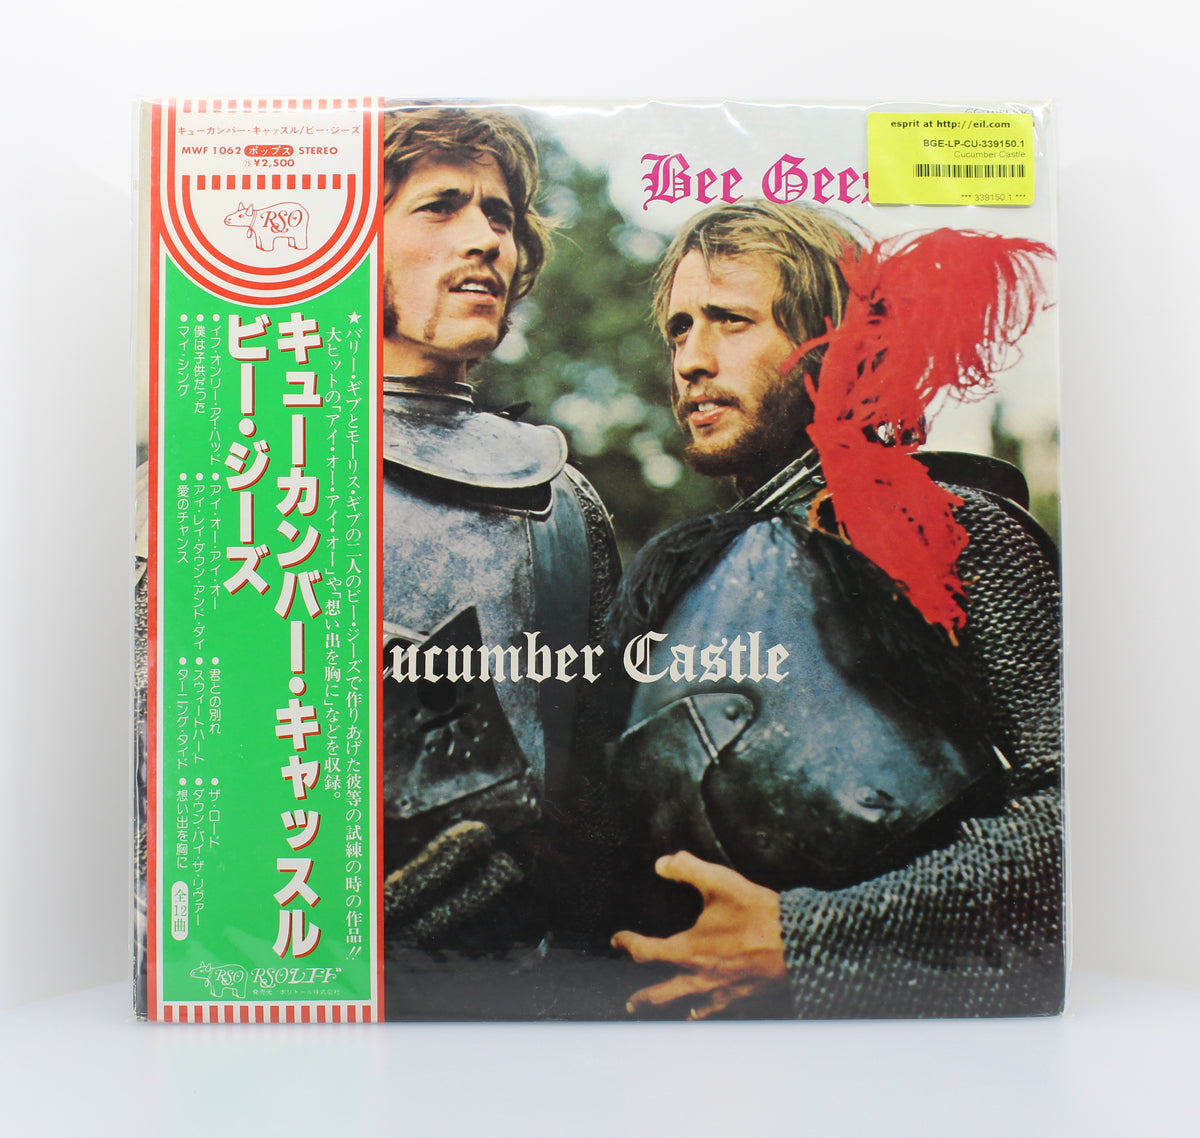 Bee Gees – Cucumber Castle, Vinyl, LP, Album, Reissue, Gatefold, Japan 1979